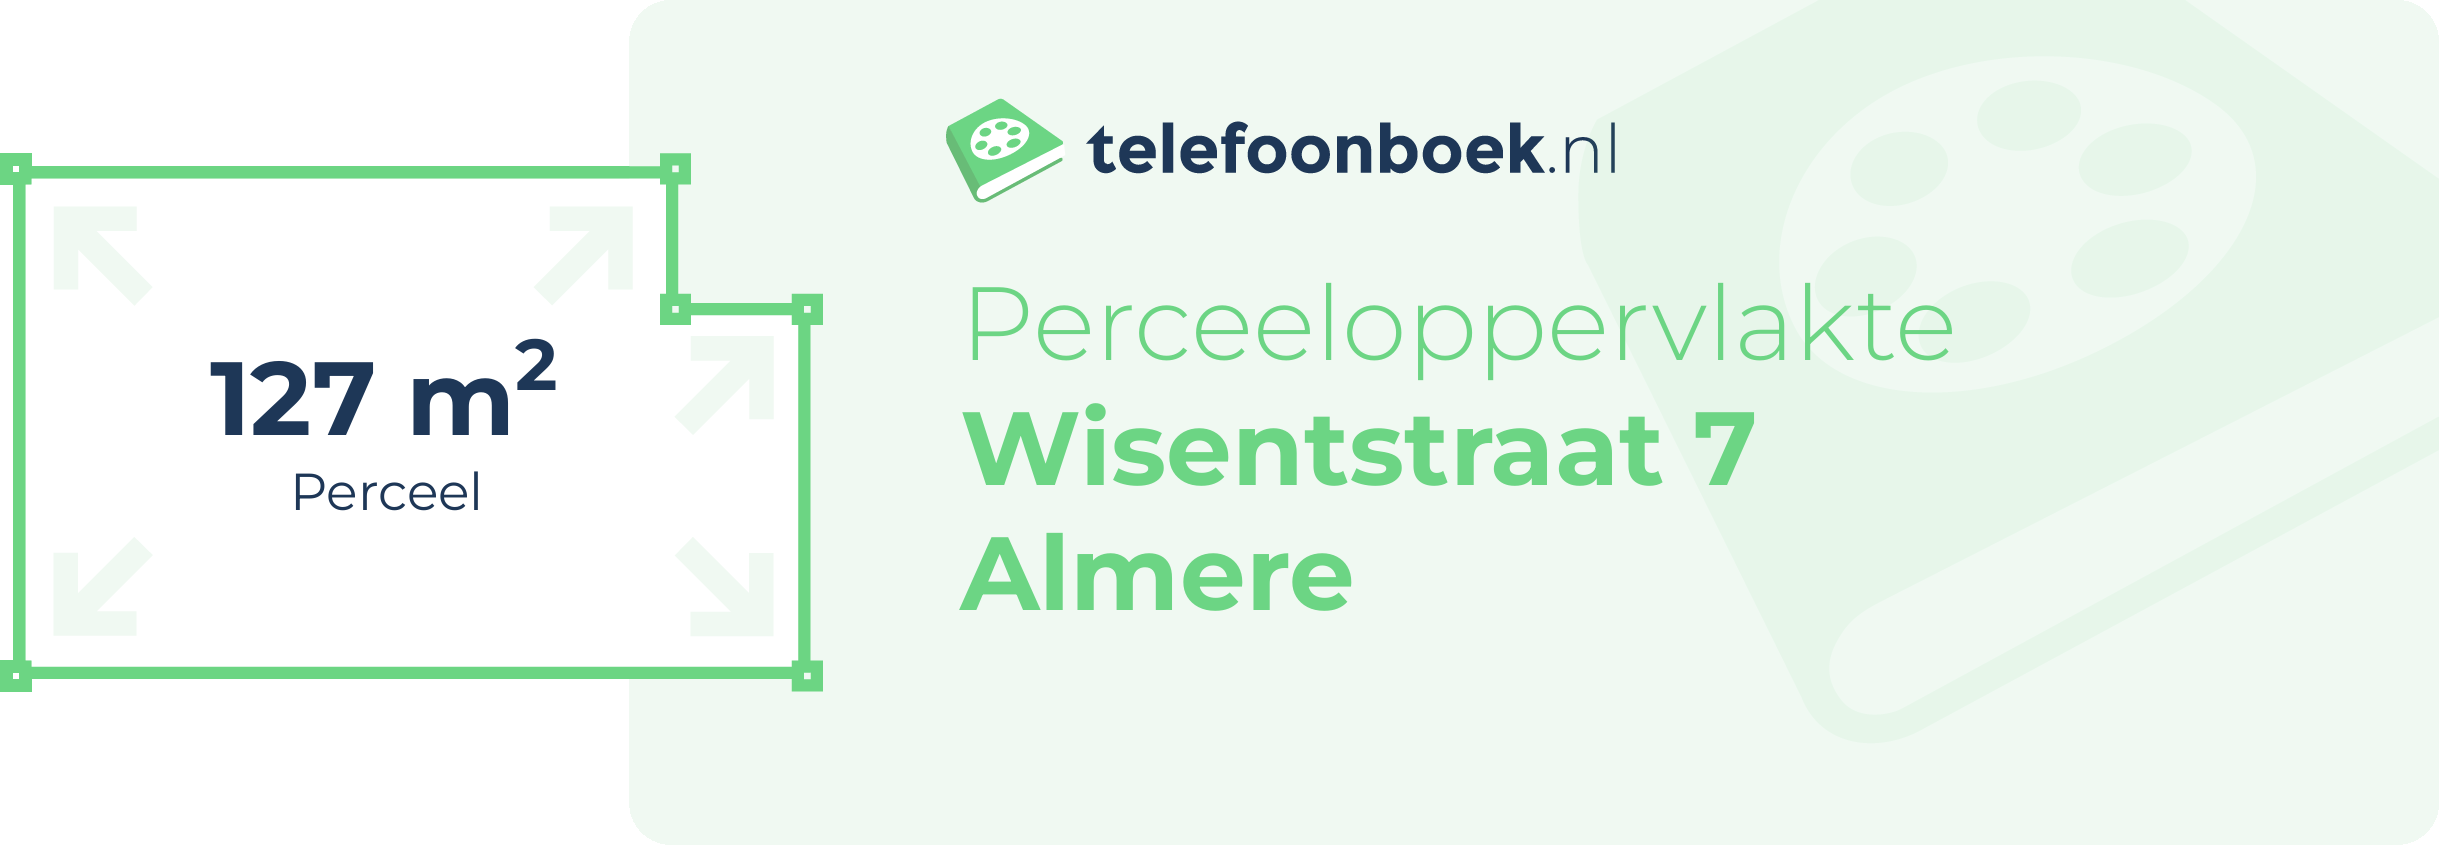 Perceeloppervlakte Wisentstraat 7 Almere